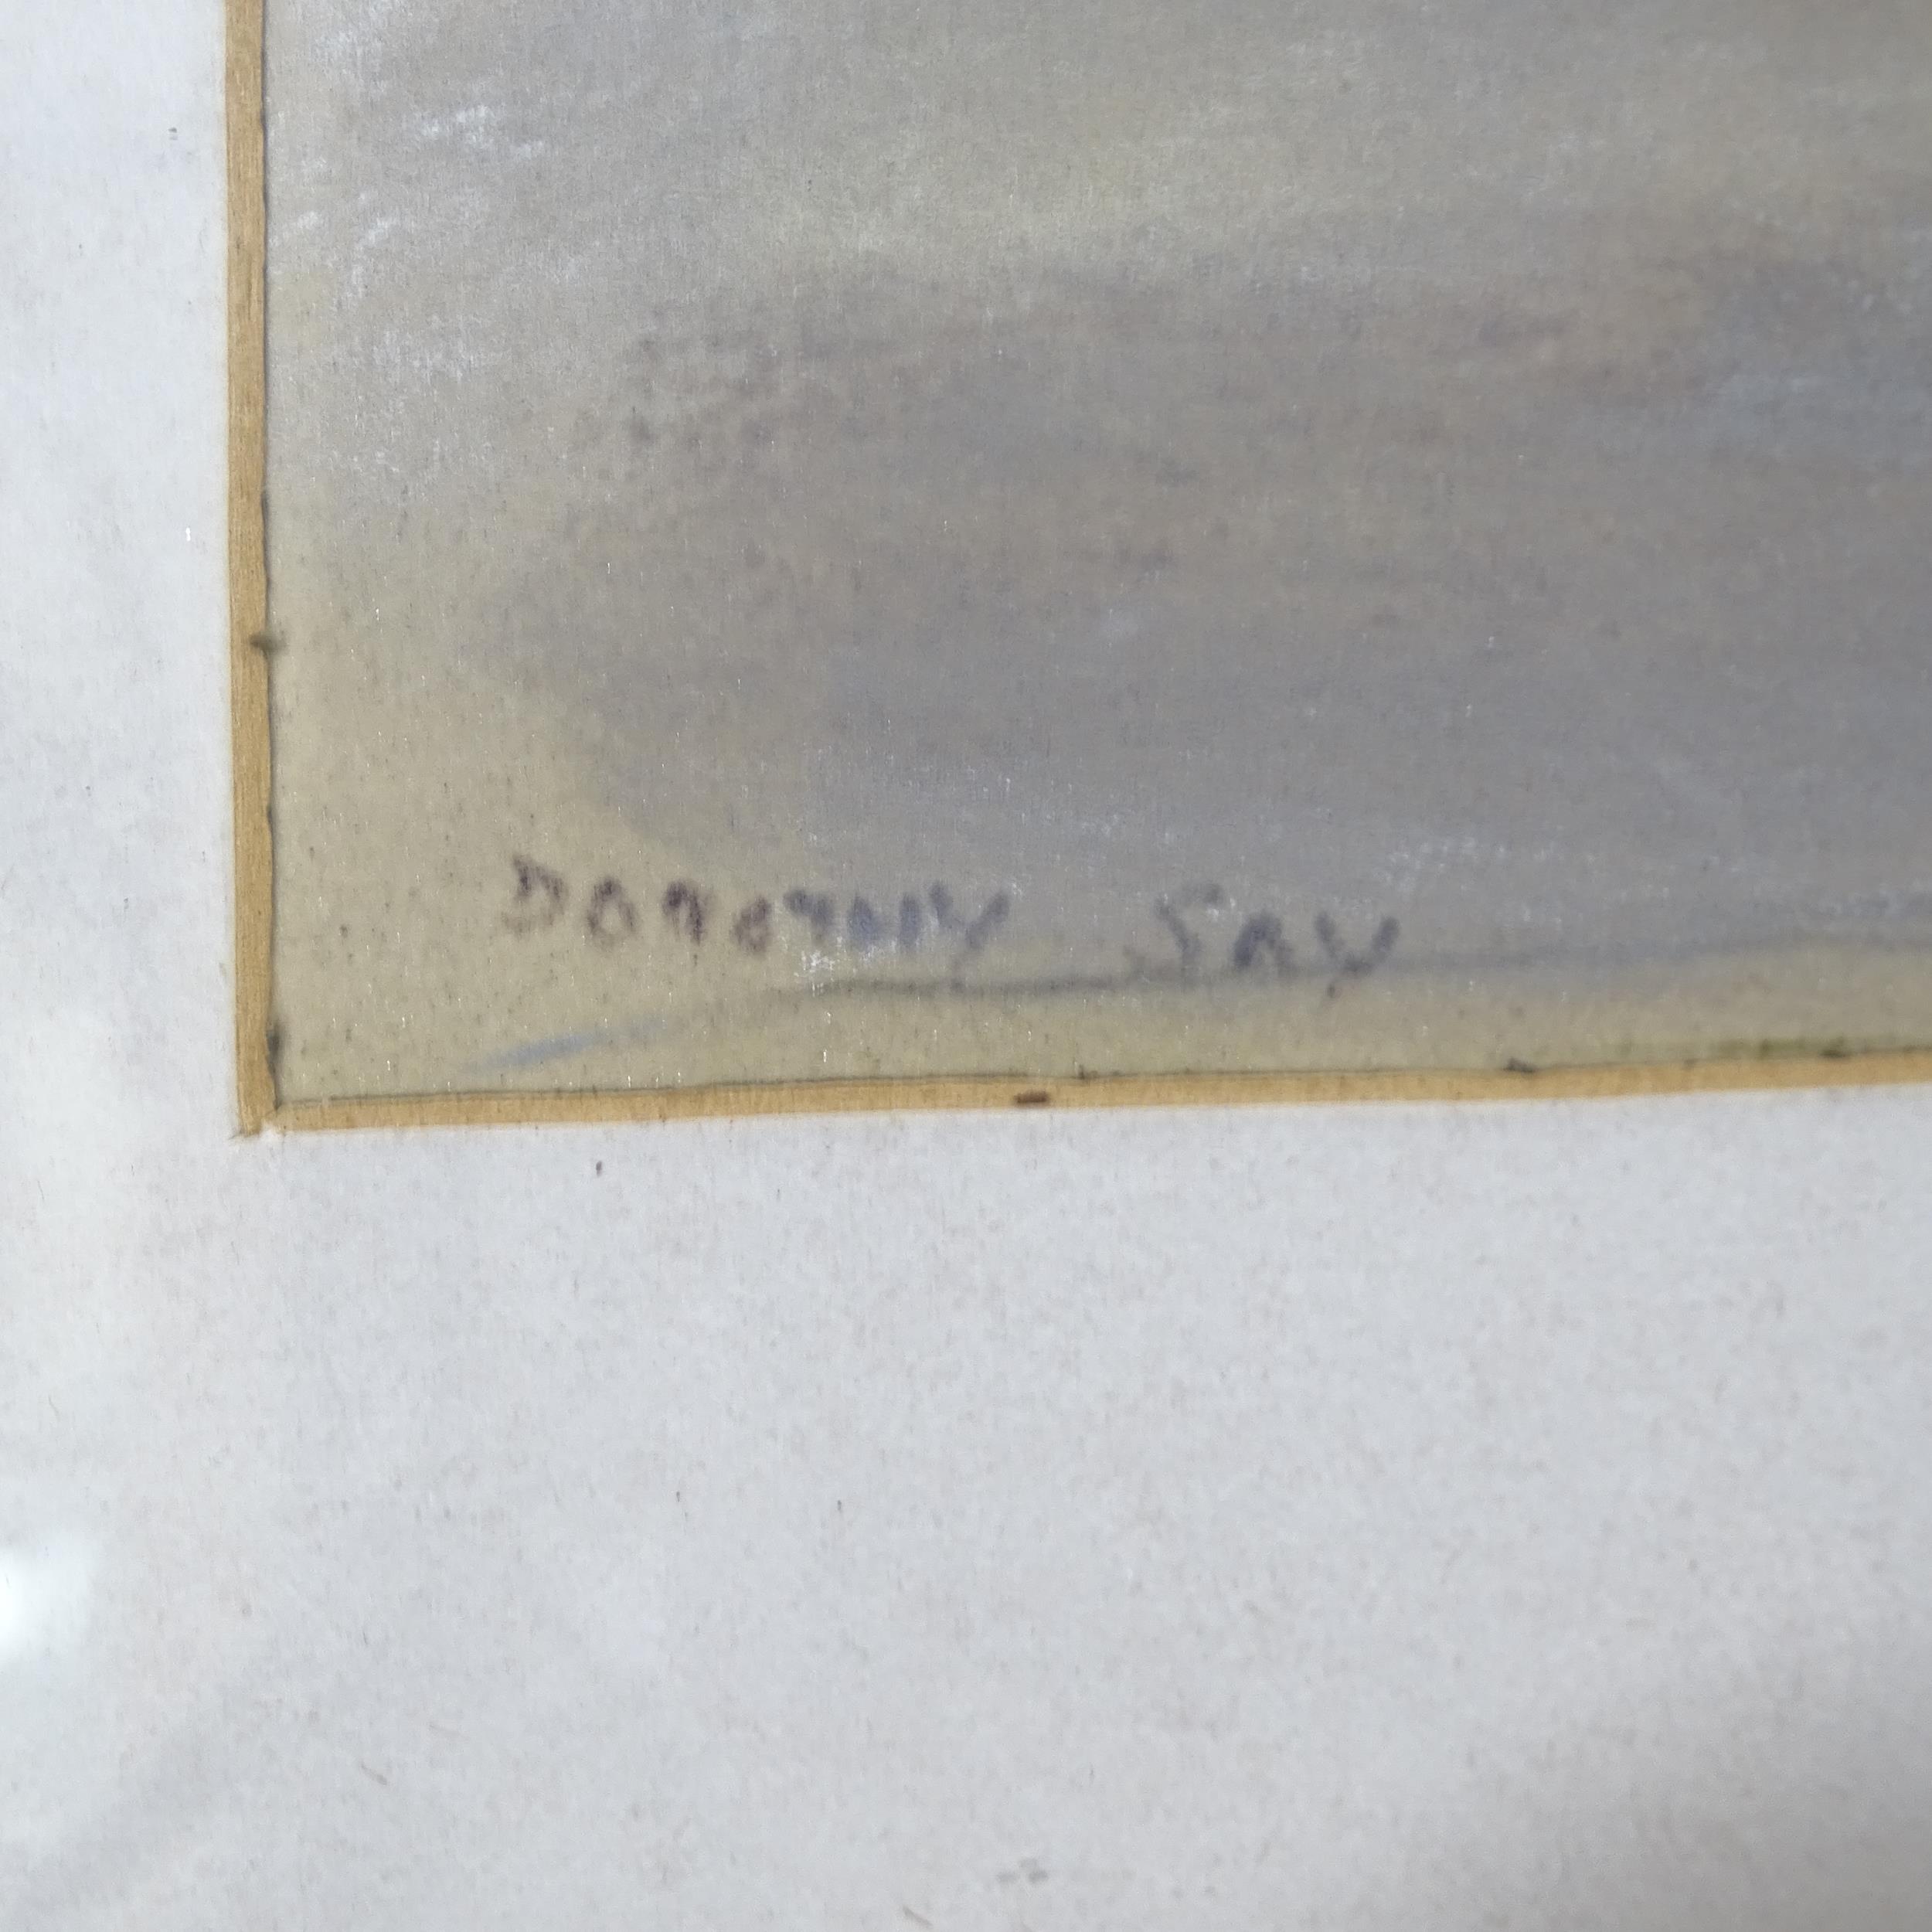 Dorothy Say, coloured pastels, coastal scene, signed, 34cm x 47cm, framed Good condition, mount - Image 2 of 2